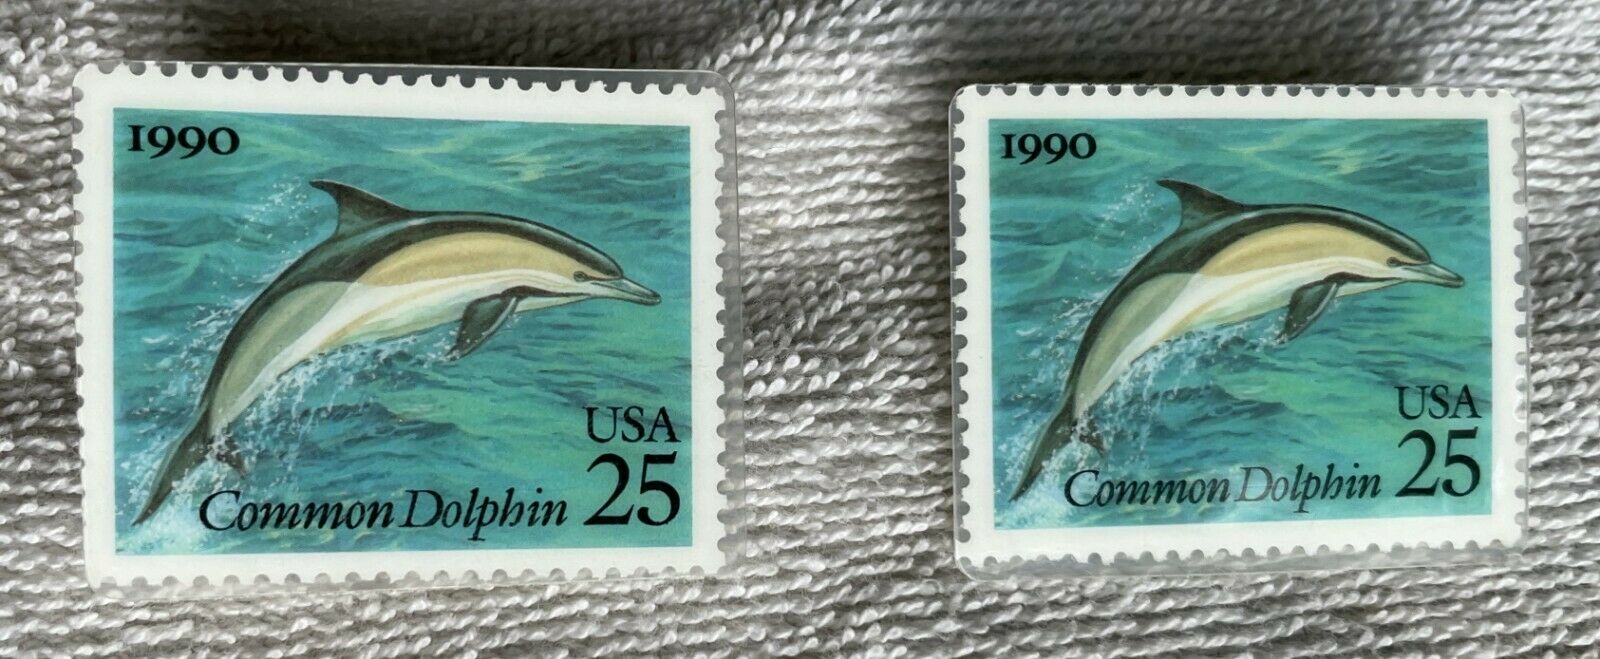 1990 25c Sea Creatures, Dolphin, Two Unused Vintage Postage Stamp Pins Item 2511